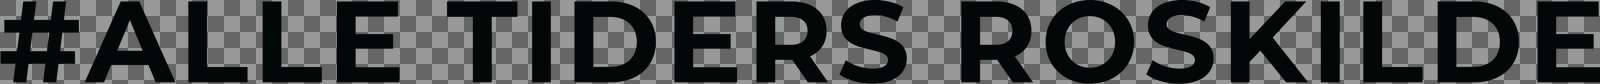 RK   Logo   CMYK   17 ATR